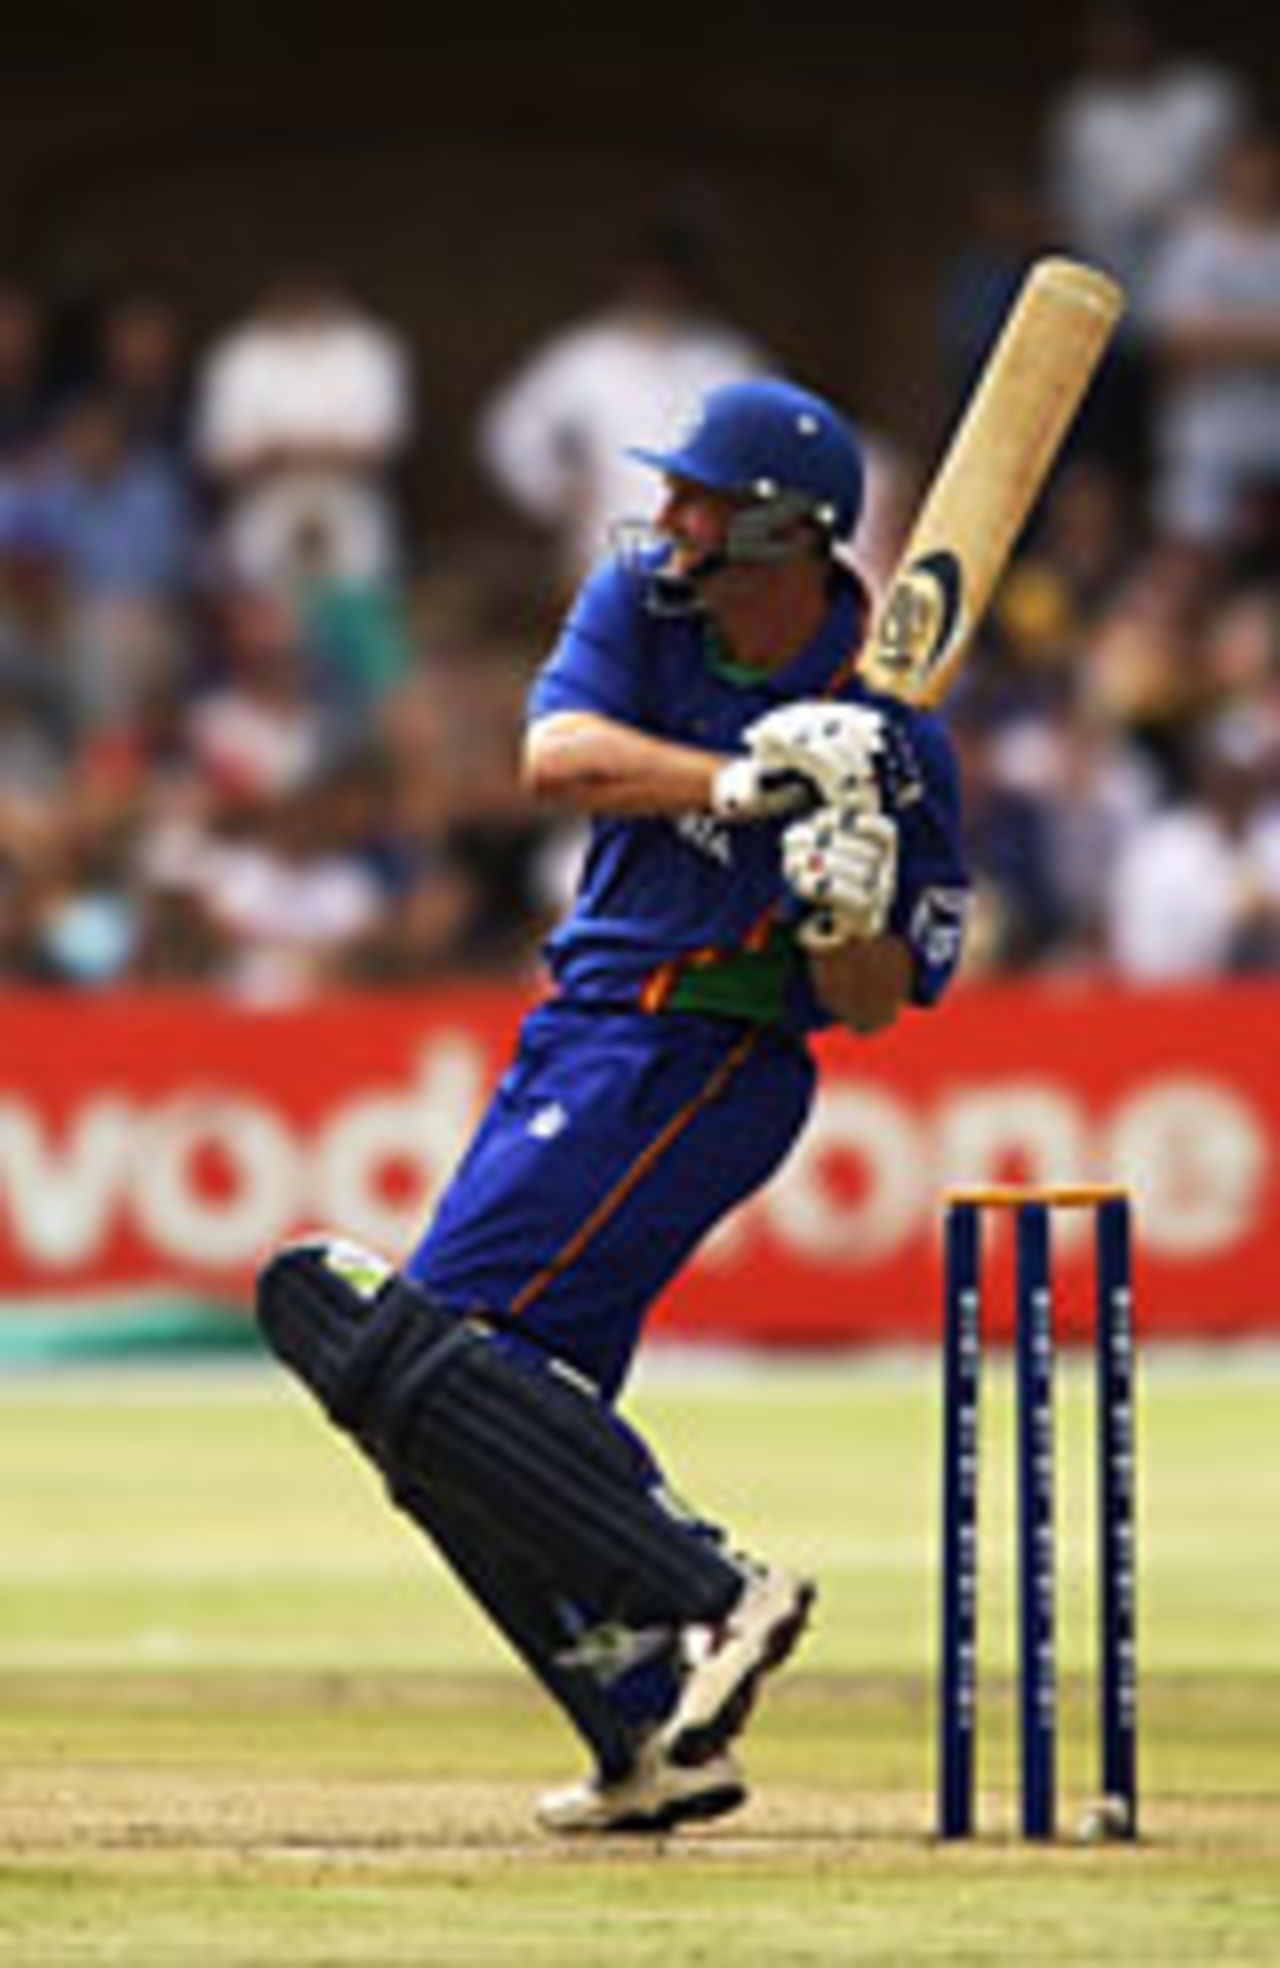 Jan-Berrie Burger batting, England v Namibia, Port Elizabeth, February 19 2003